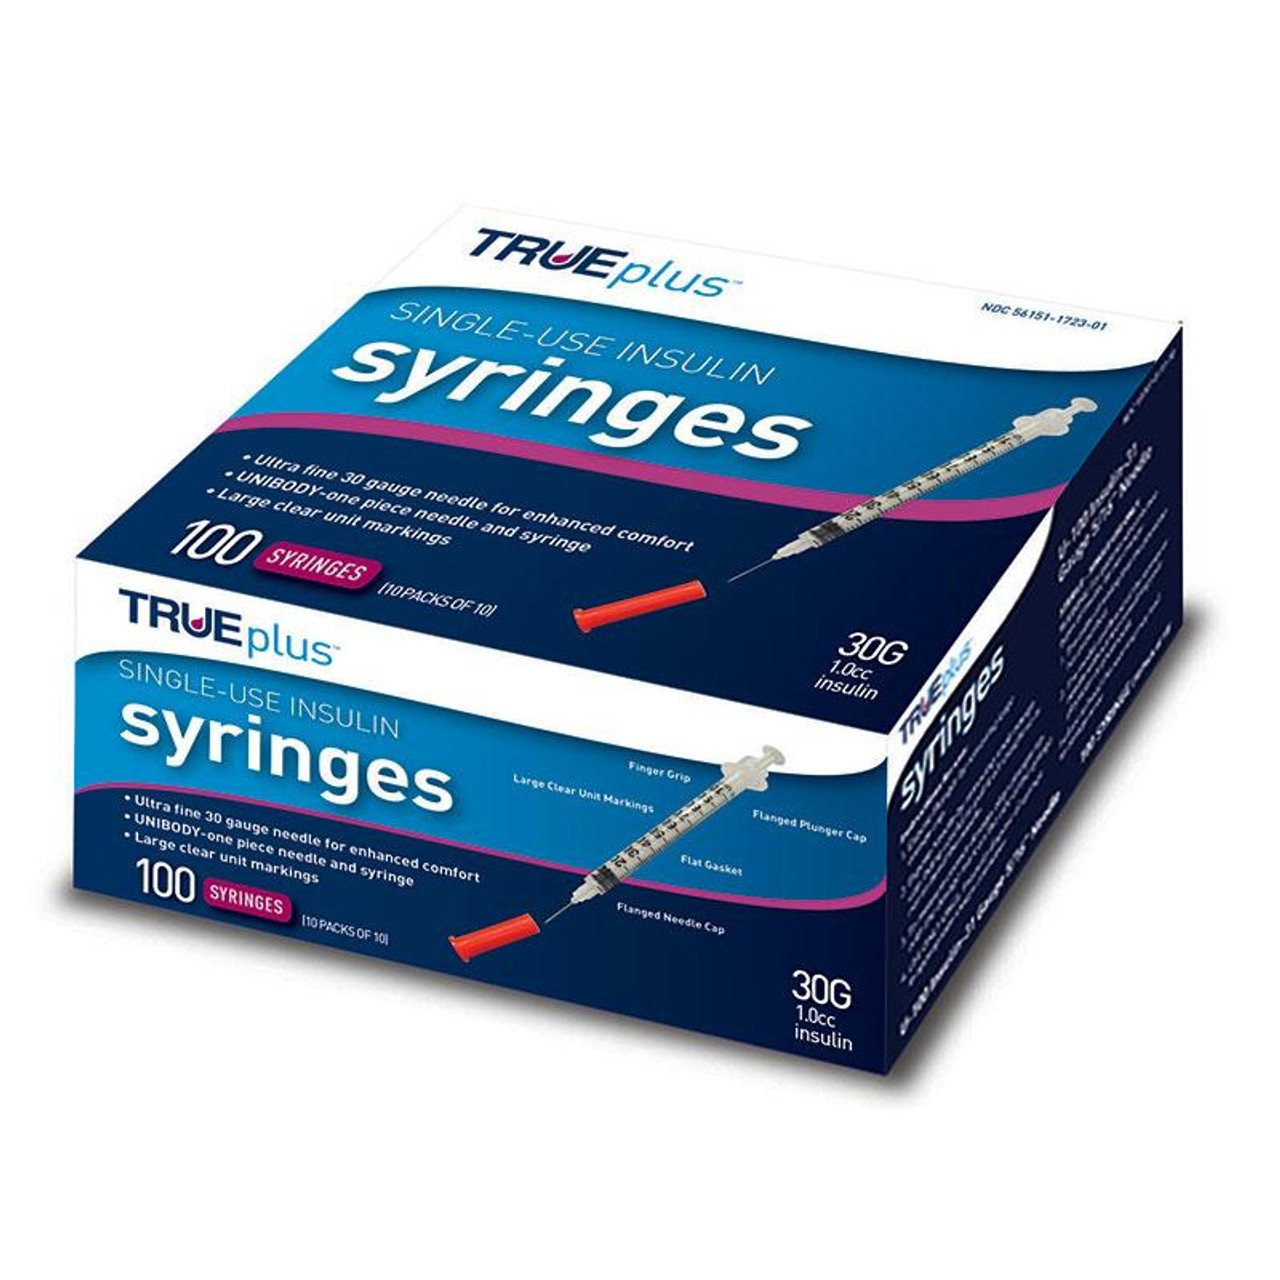 Trueplus Single Use Insulin Syringe 30g X 516 1 Ml 100 Count 